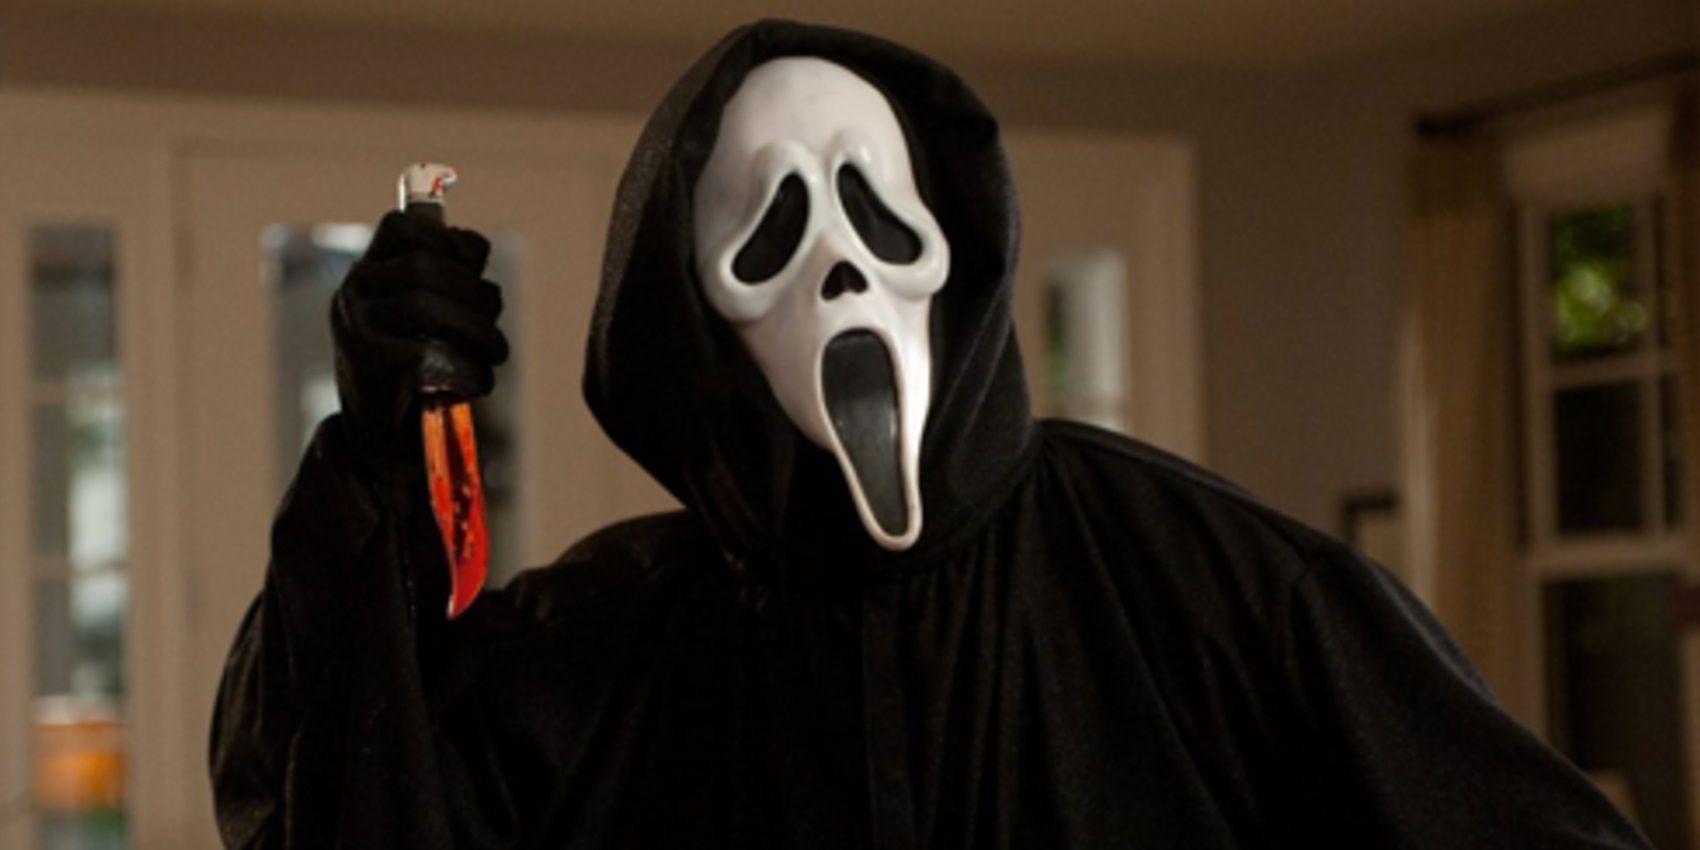 The Ghostface killer raises a bloody knife in Scream.